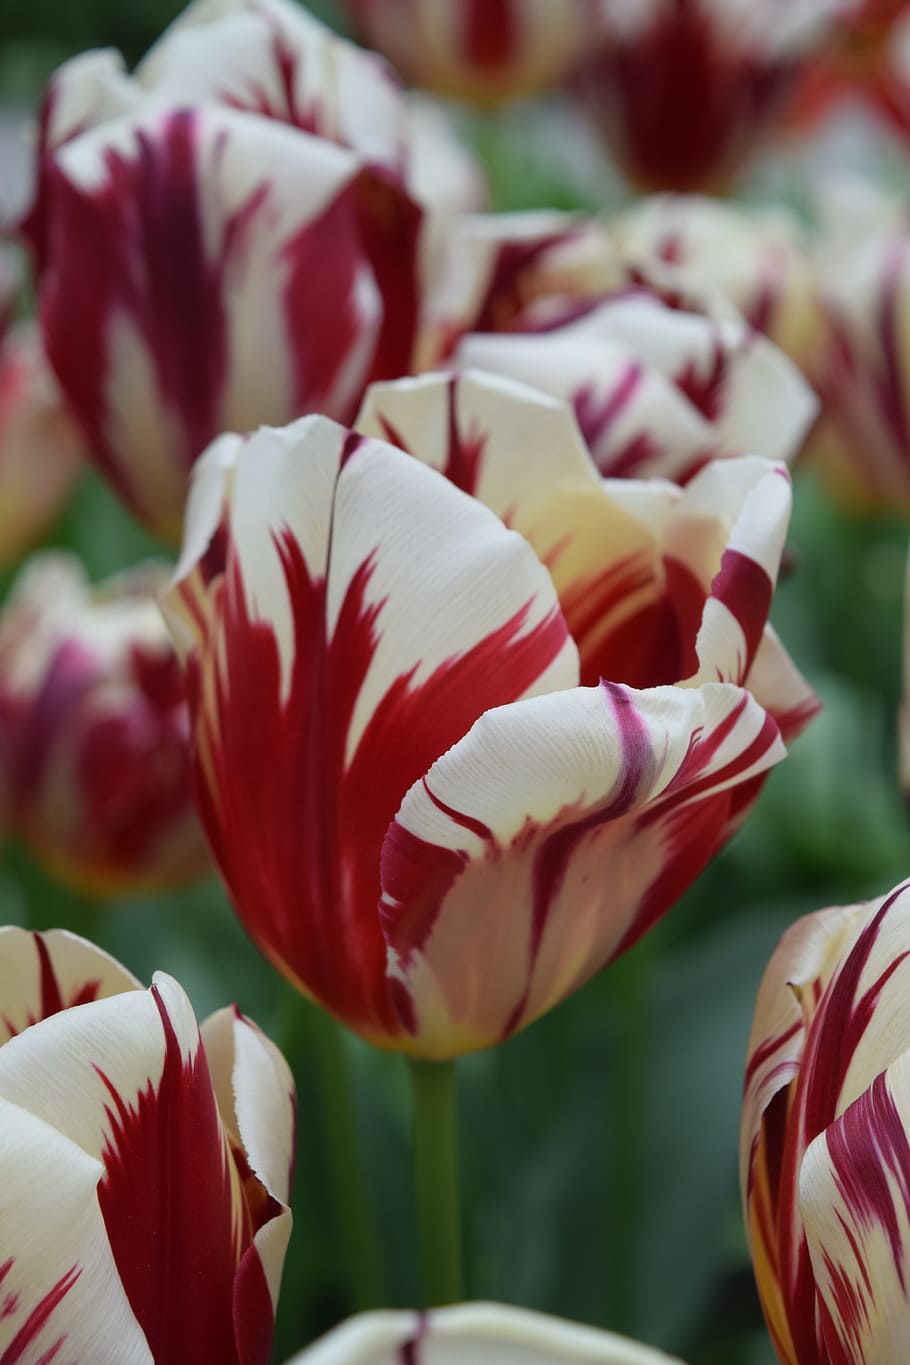 Tulip, Tulips, Flowers, White, red, holland, amsterdam, keukenhof, bloom, spring